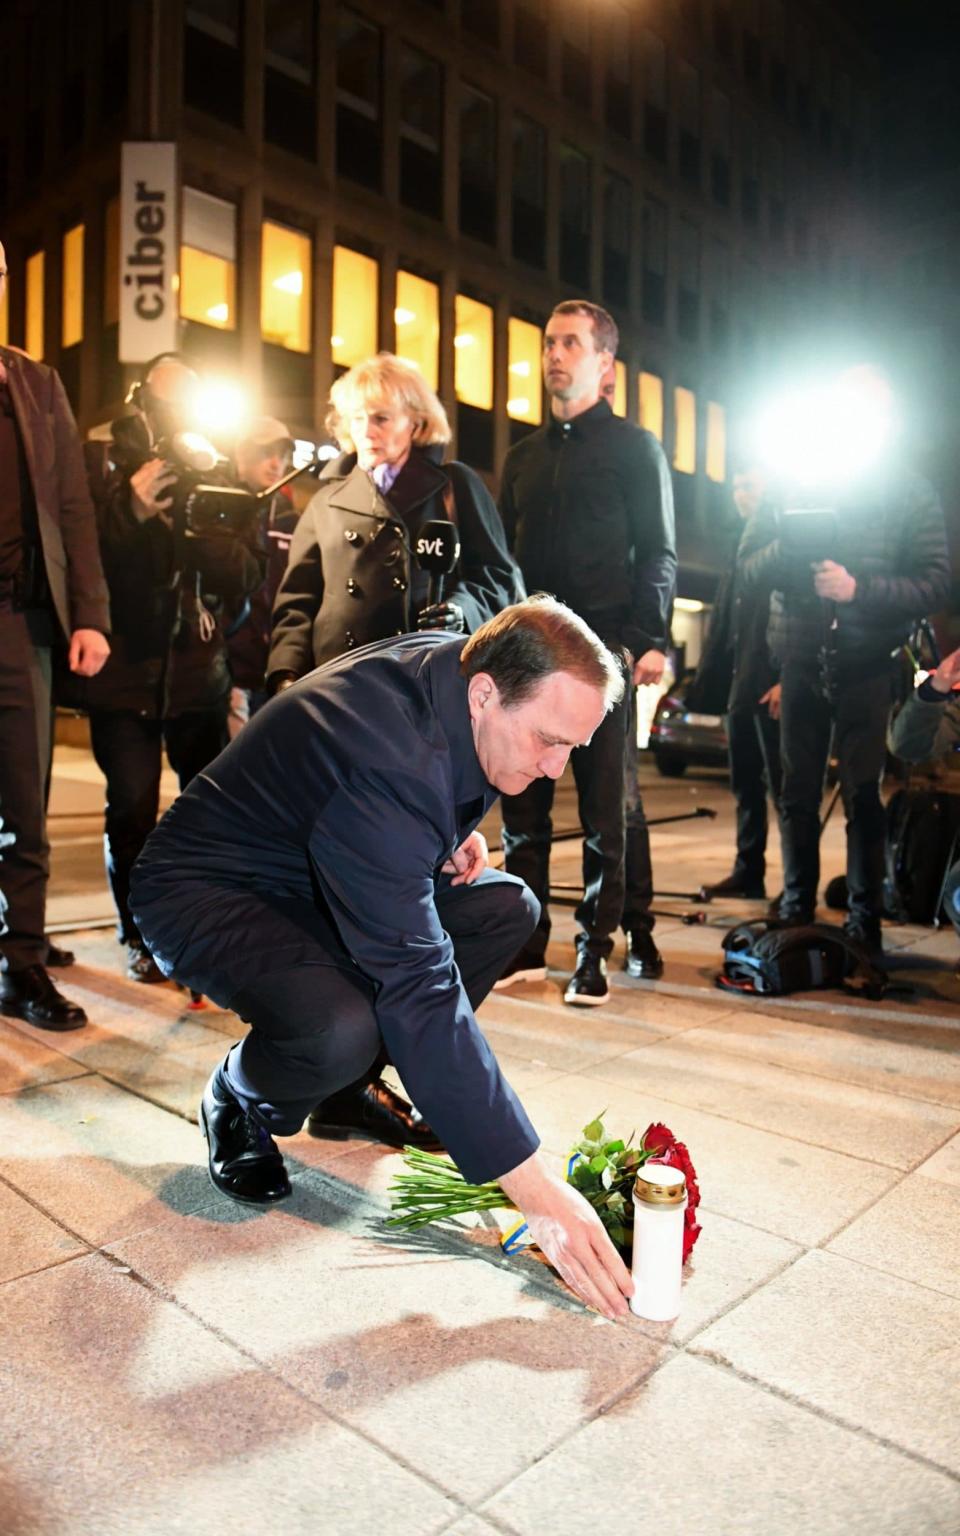 Sweden's Prime Minister Stefan Lofven place flowers at Queens Street after the terror attack on Drottninggatan - Credit: Fredrik Sandberg/TT